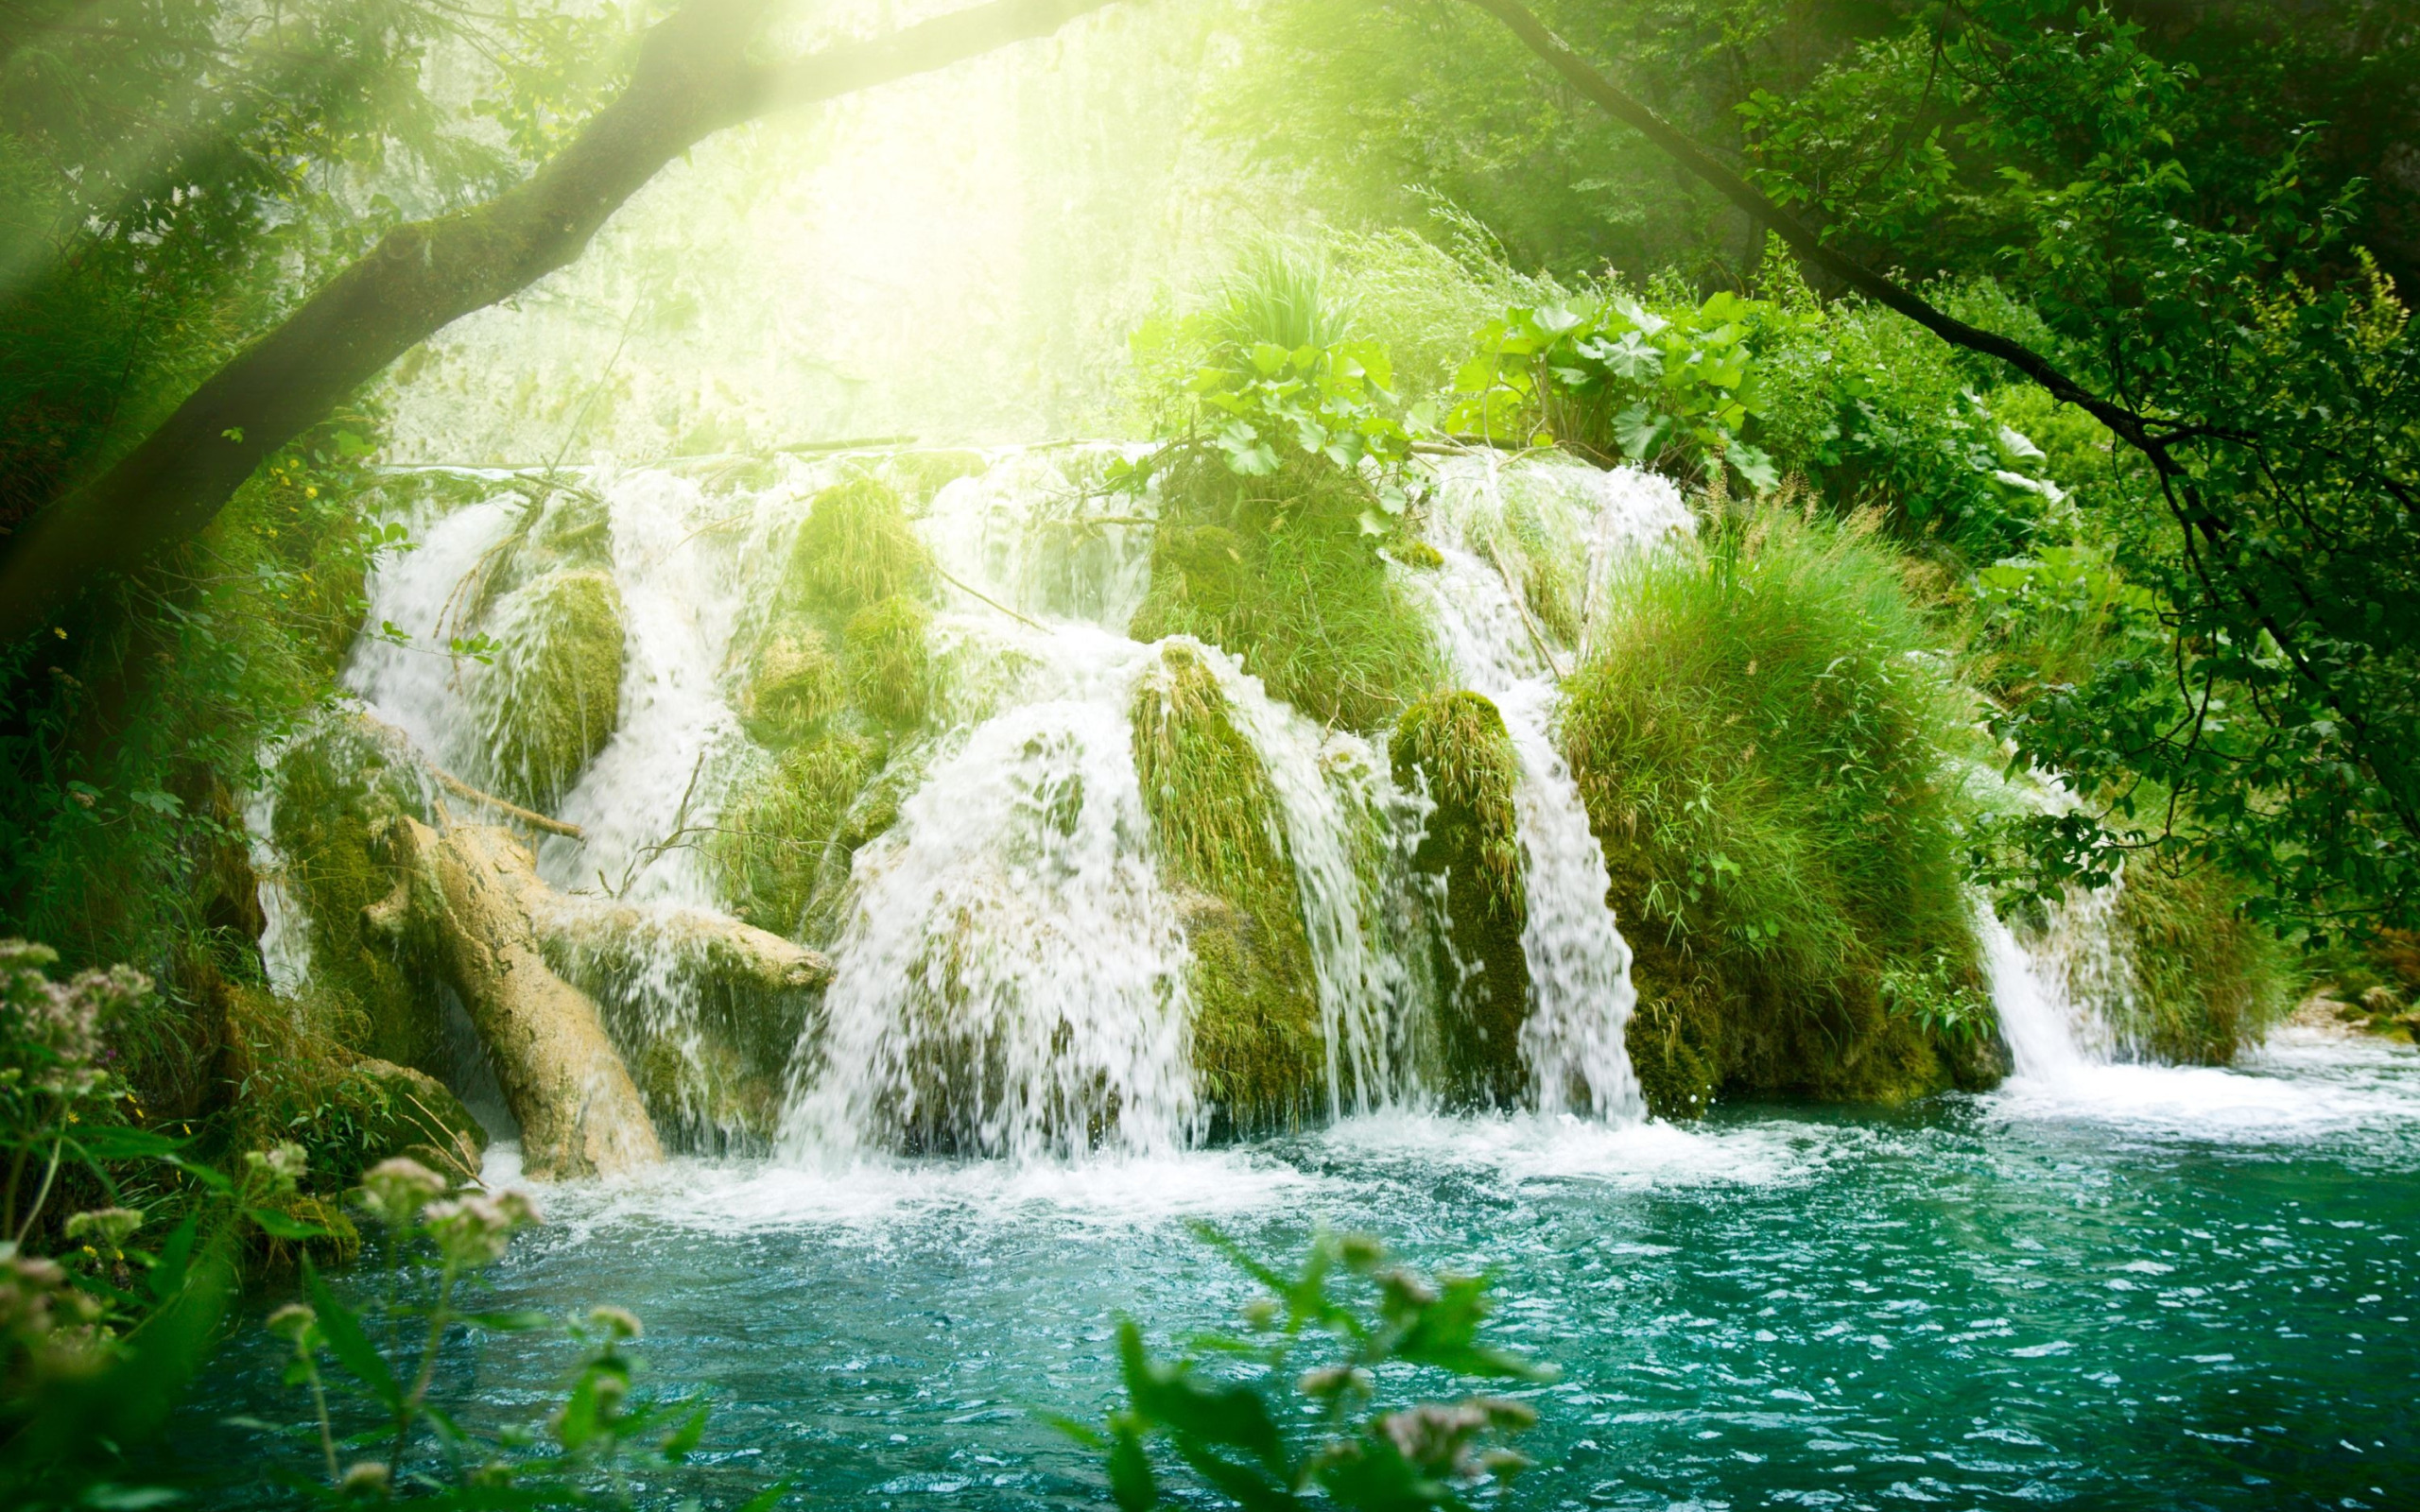 Обои на телефон живой водопад. Водопад Мосбрей. Природа водопад. Вода в природе. Живая природа водопады.